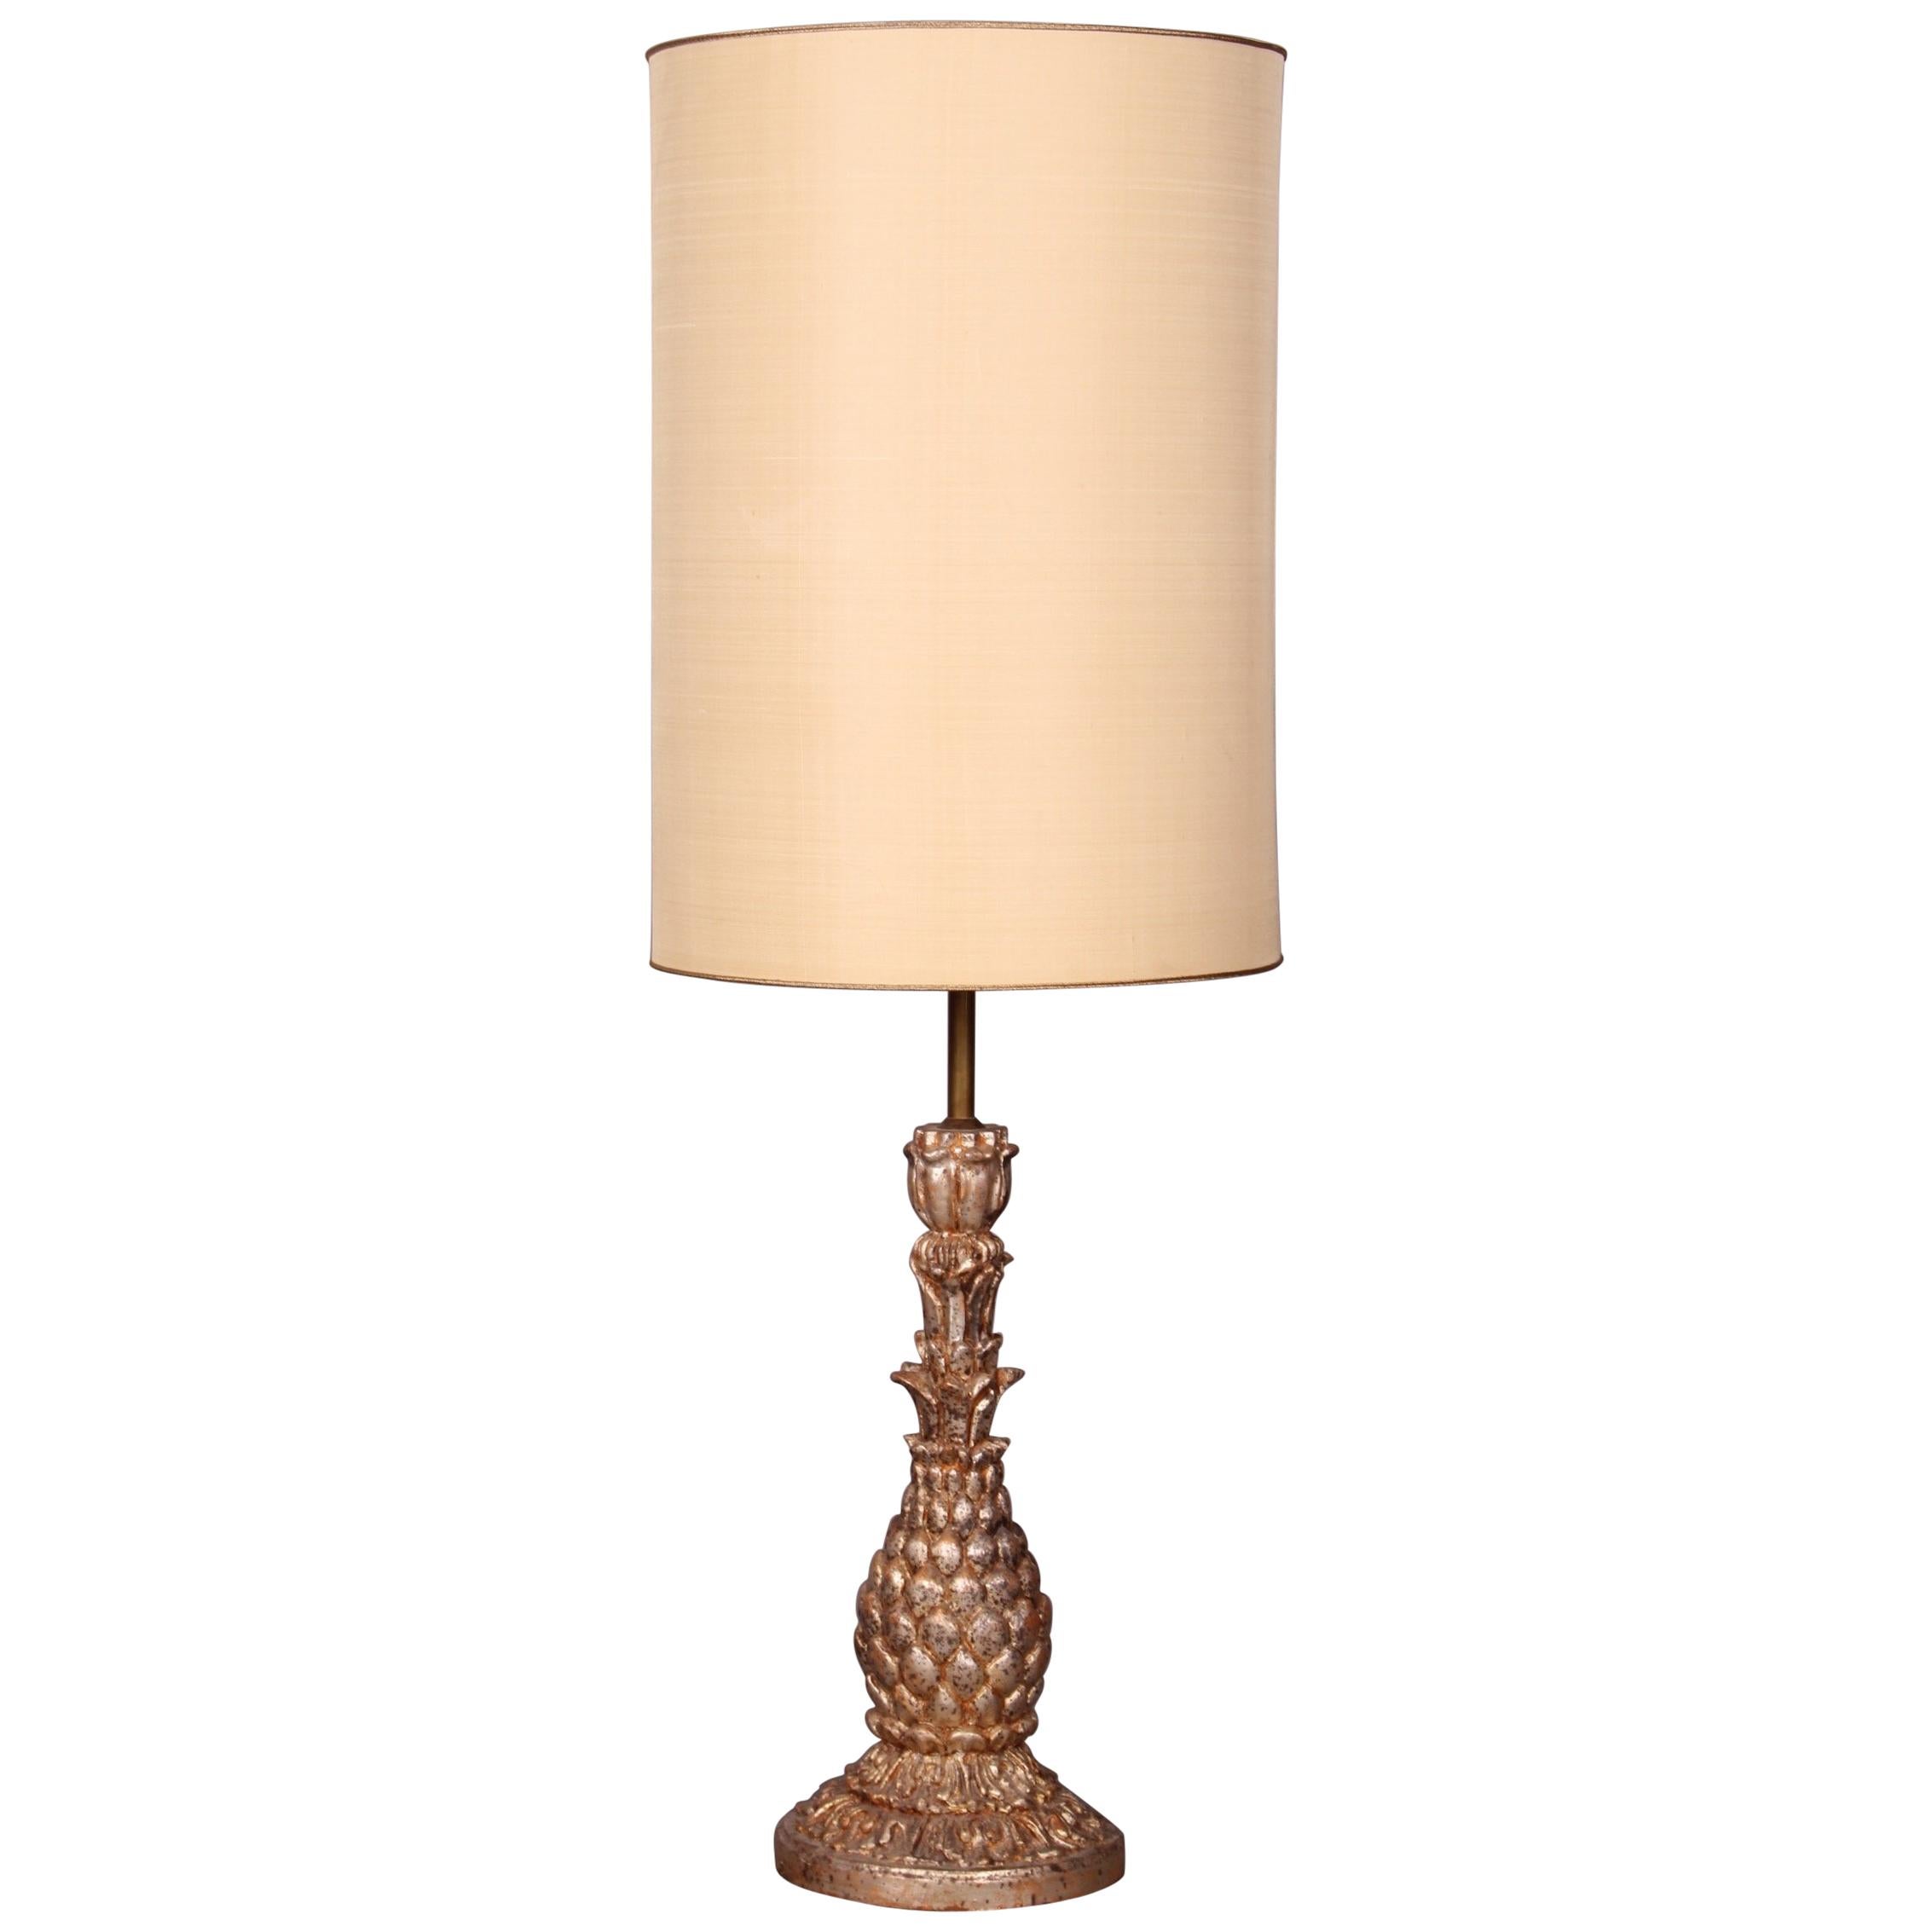 Wooden Pineapple Lamp